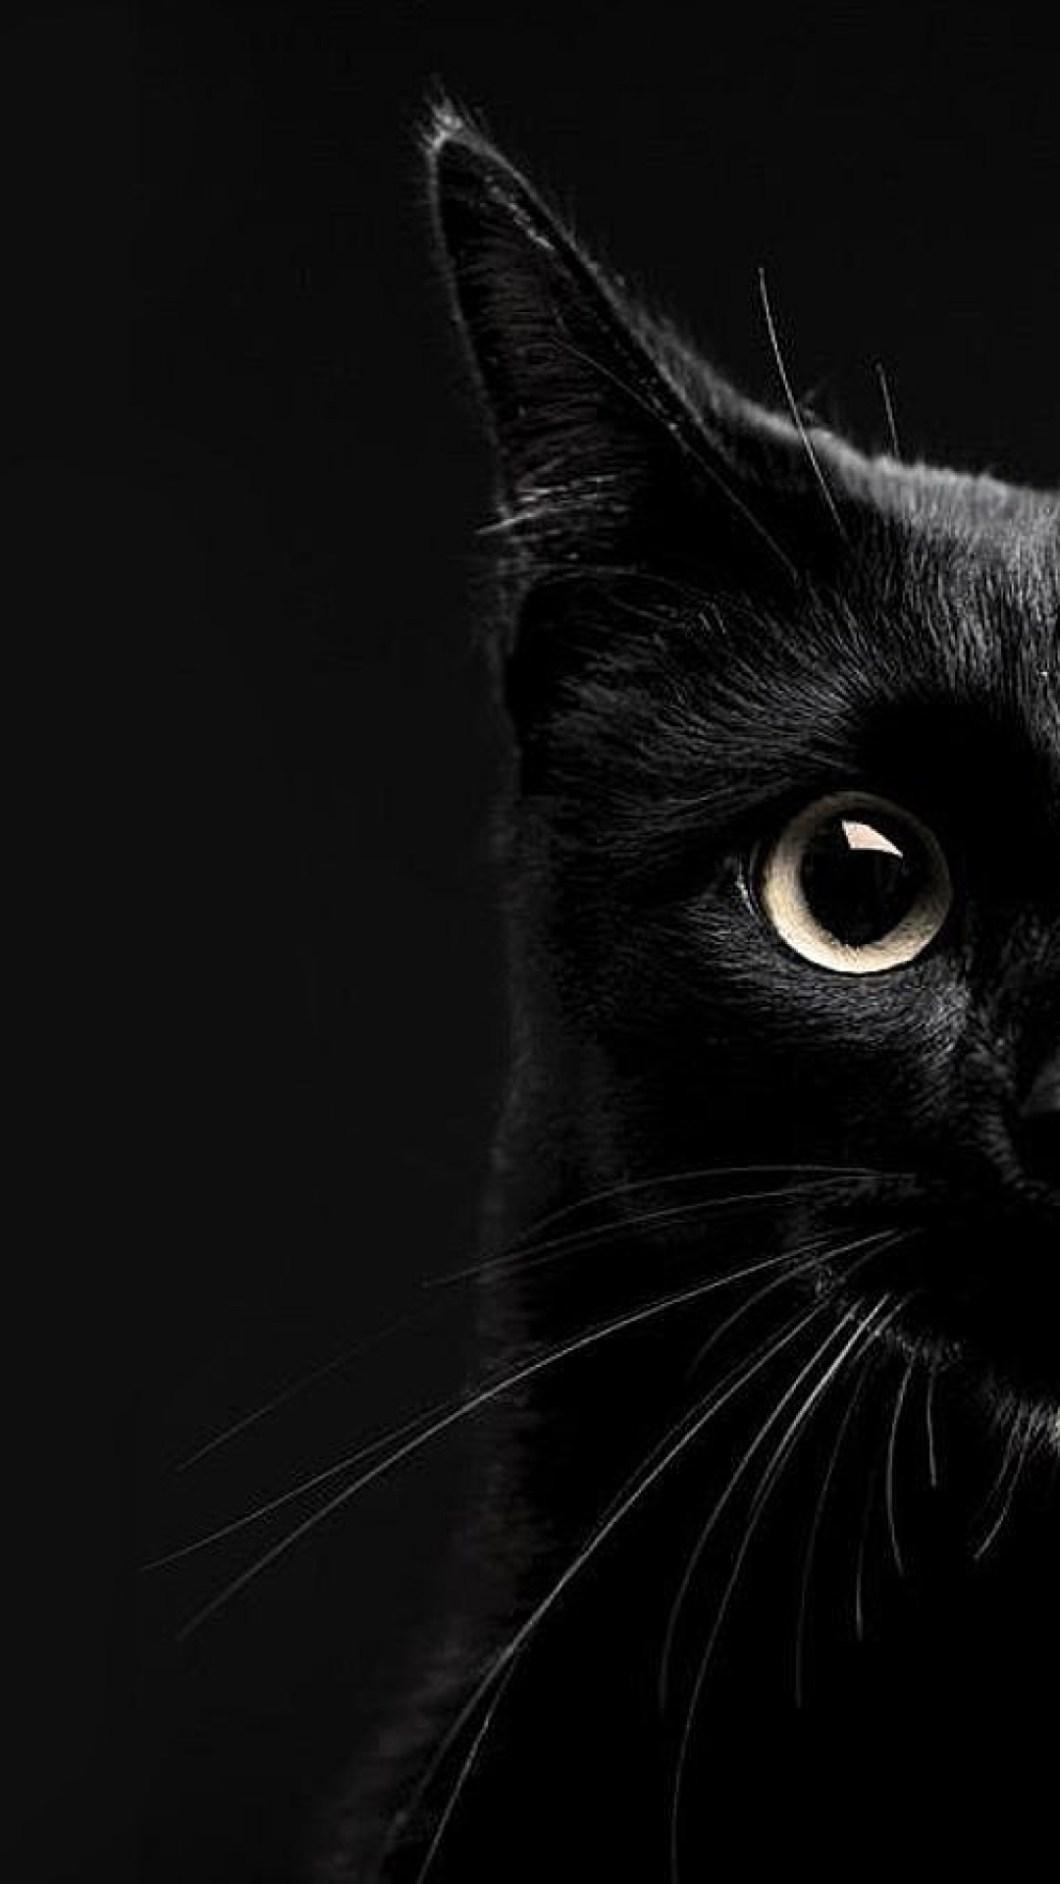 Black Cat 3D Wallpapers - Top Free Black Cat 3D Backgrounds